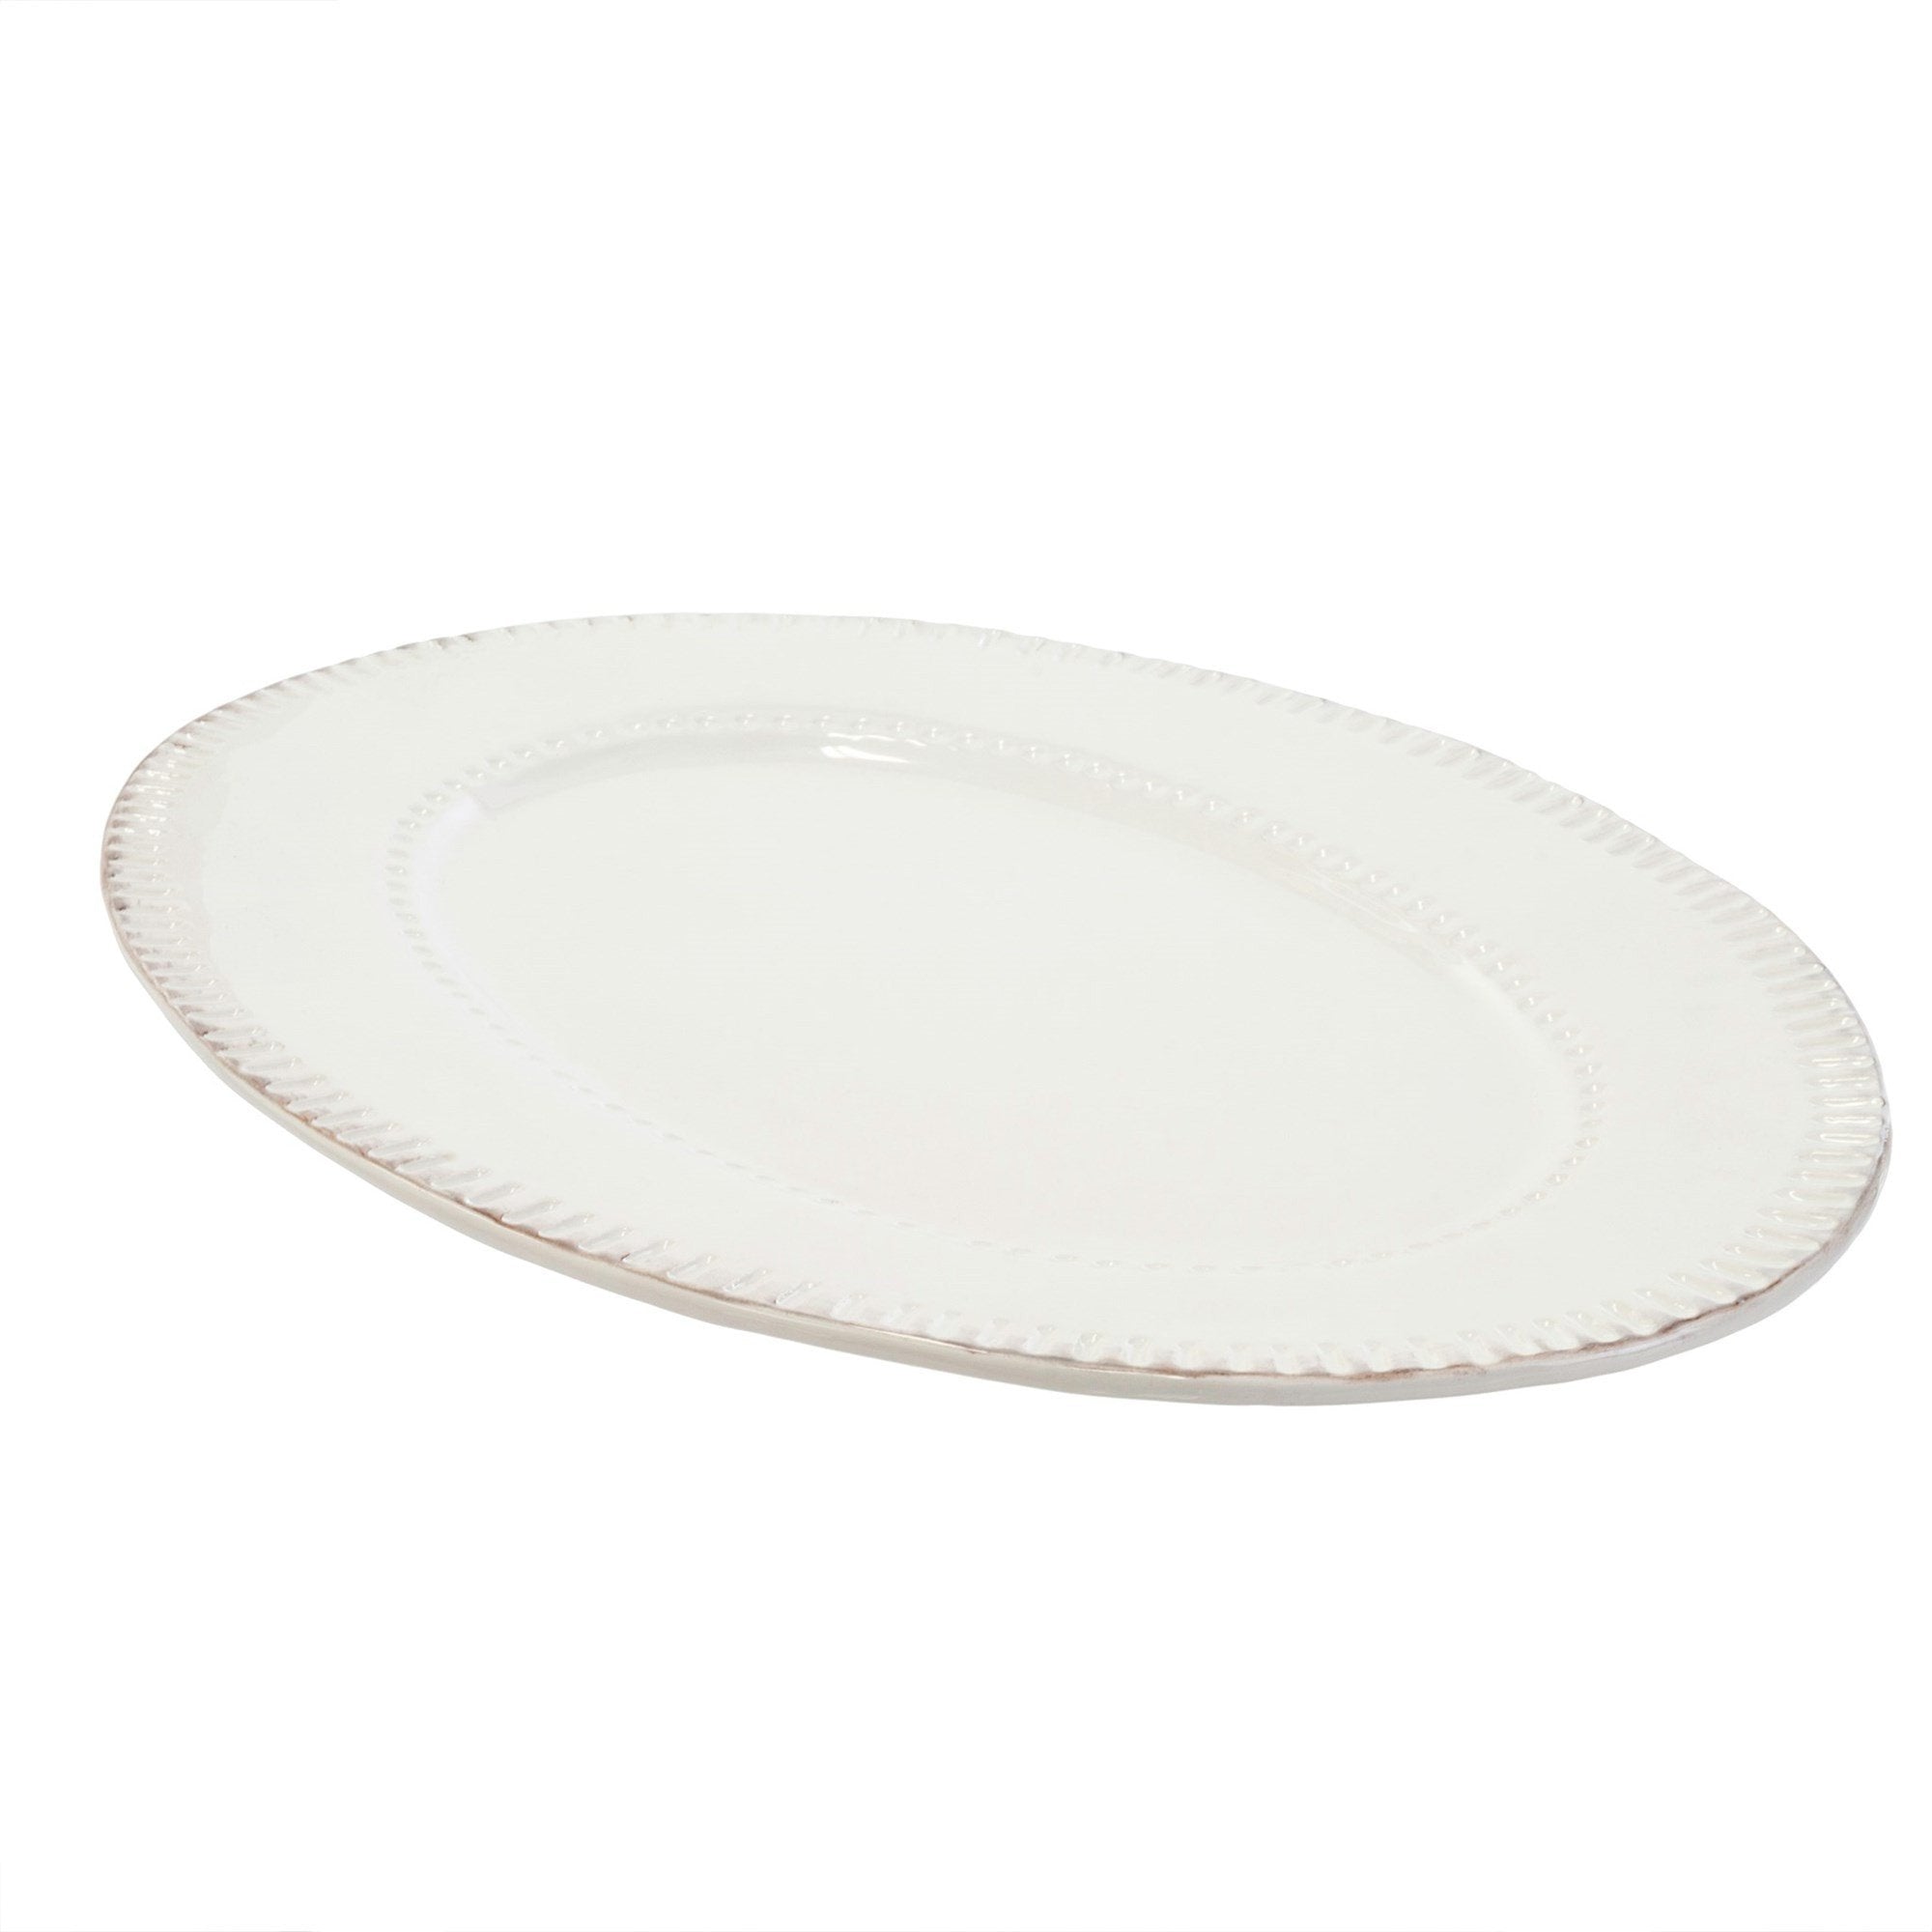 Indaba Palermo Serving Platter